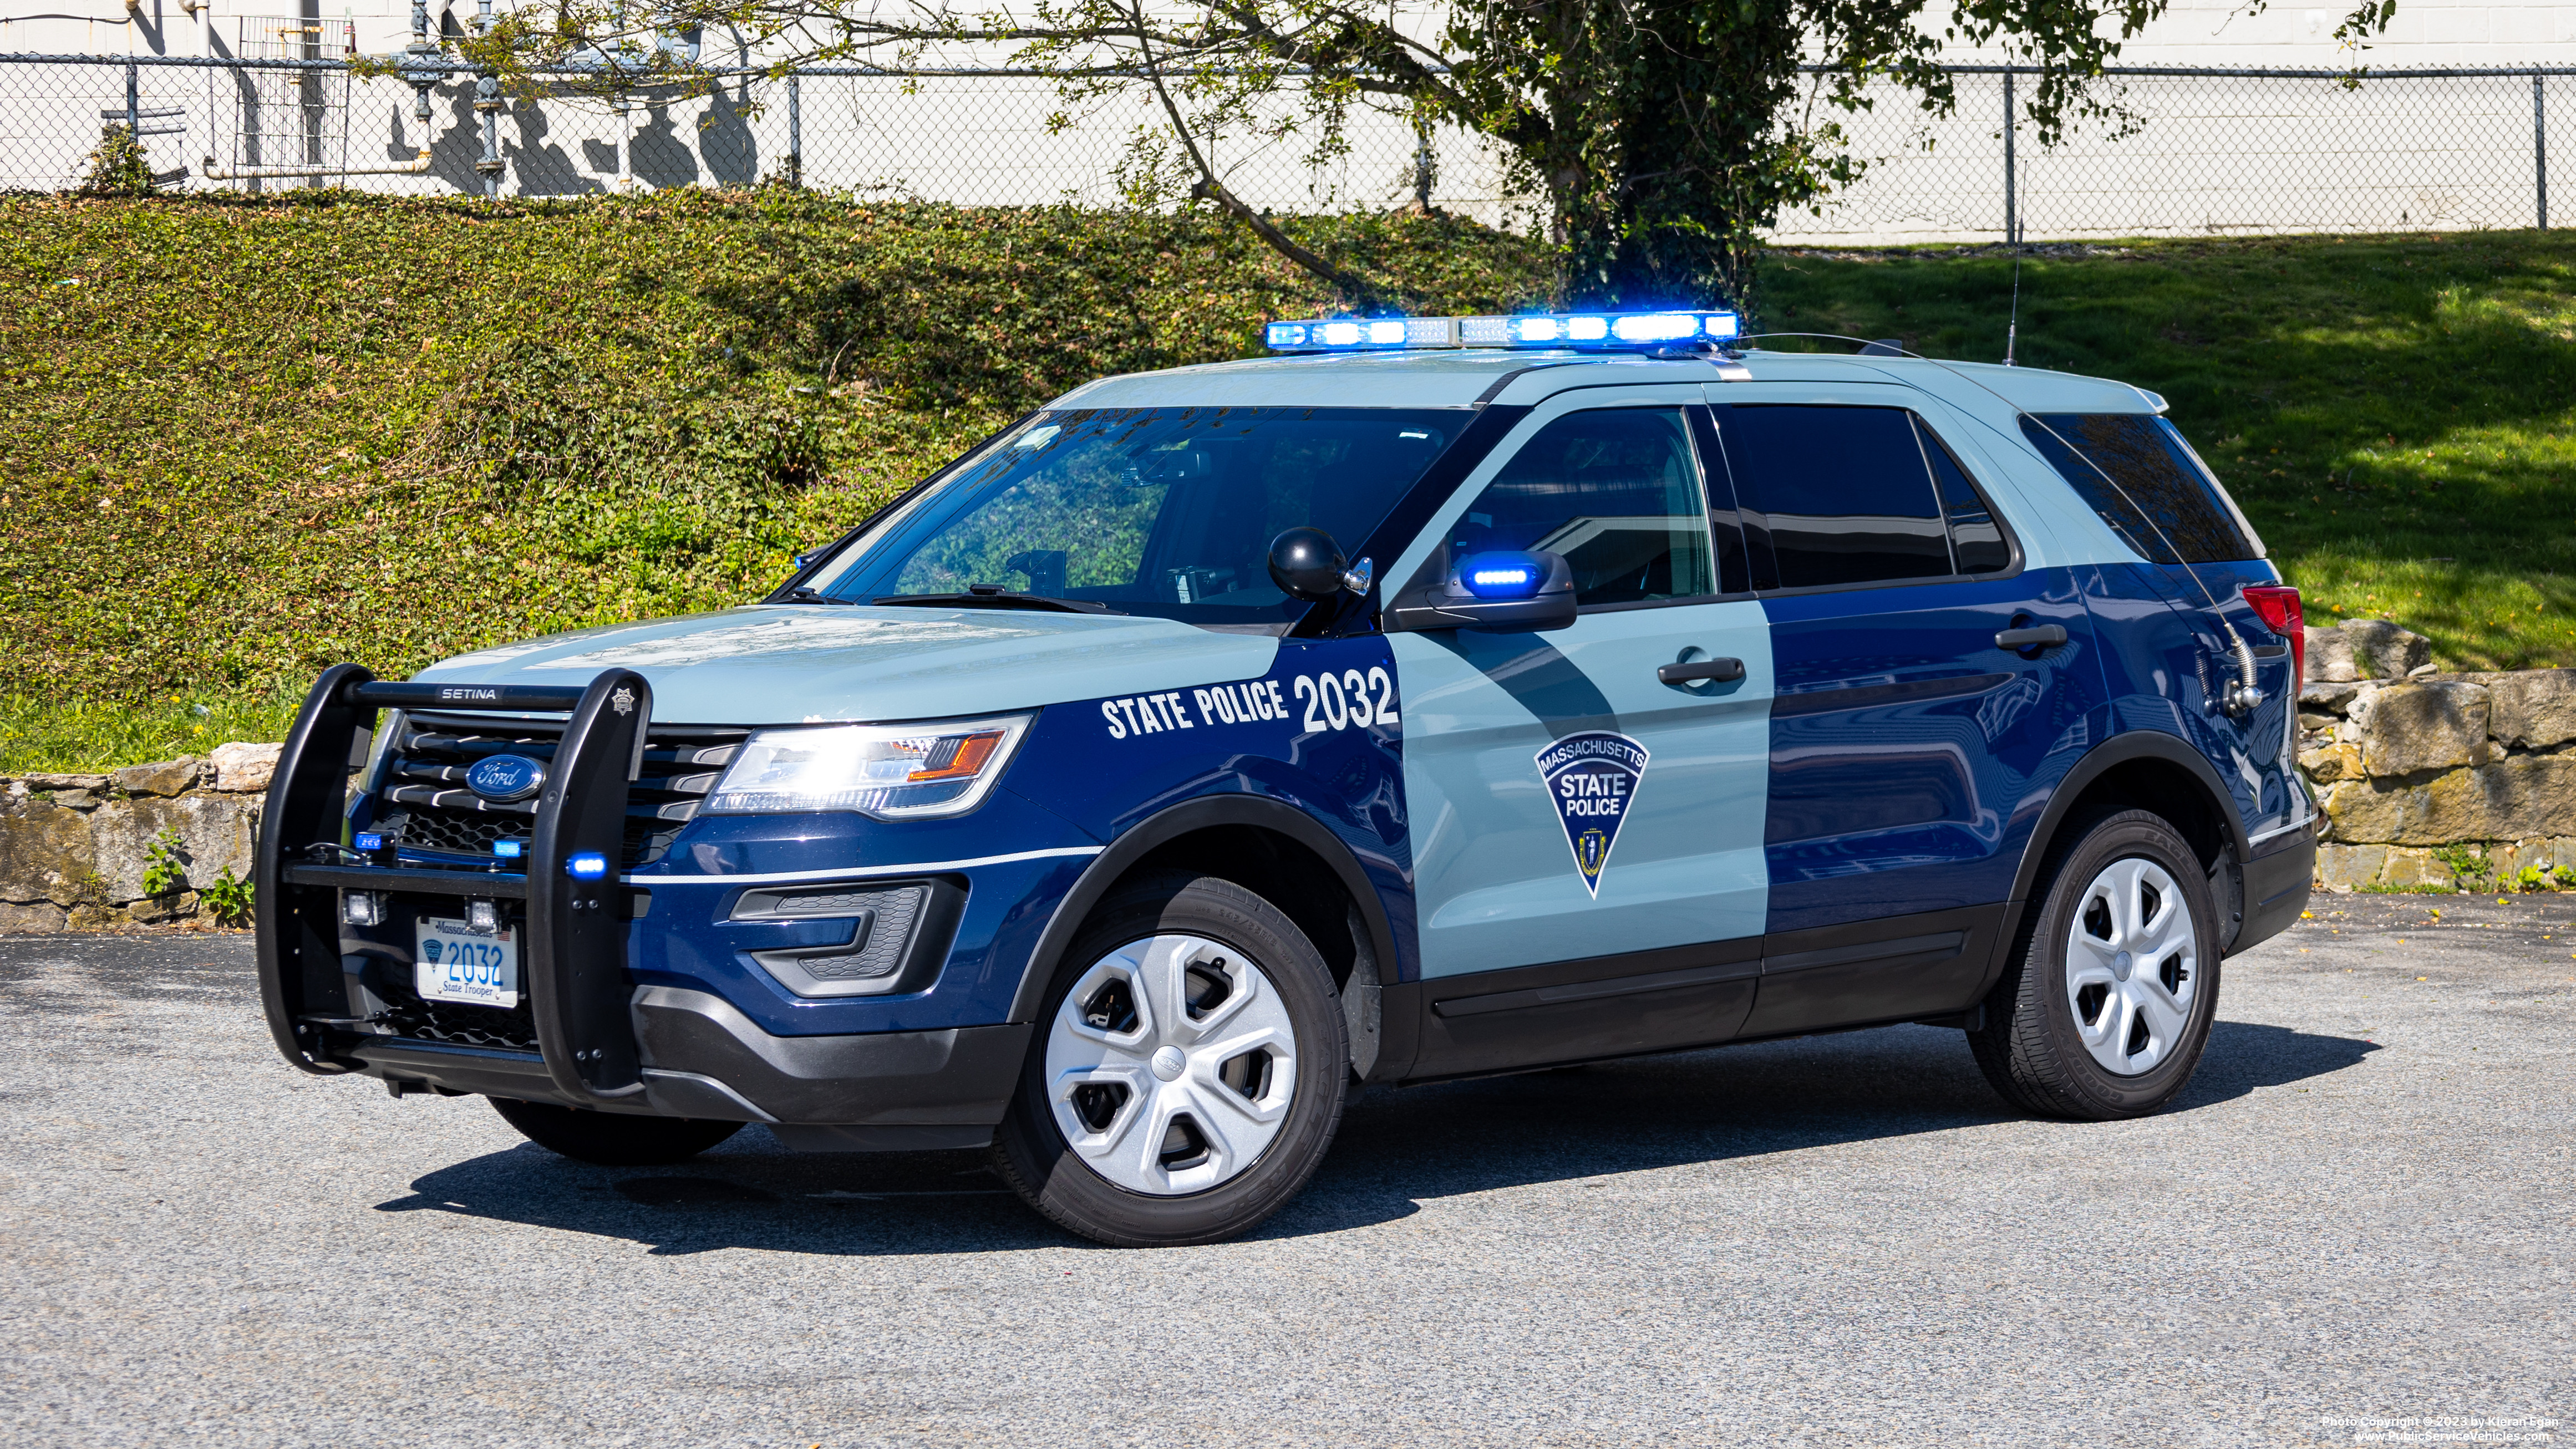 A photo  of Massachusetts State Police
            Cruiser 2032, a 2018 Ford Police Interceptor Utility             taken by Kieran Egan